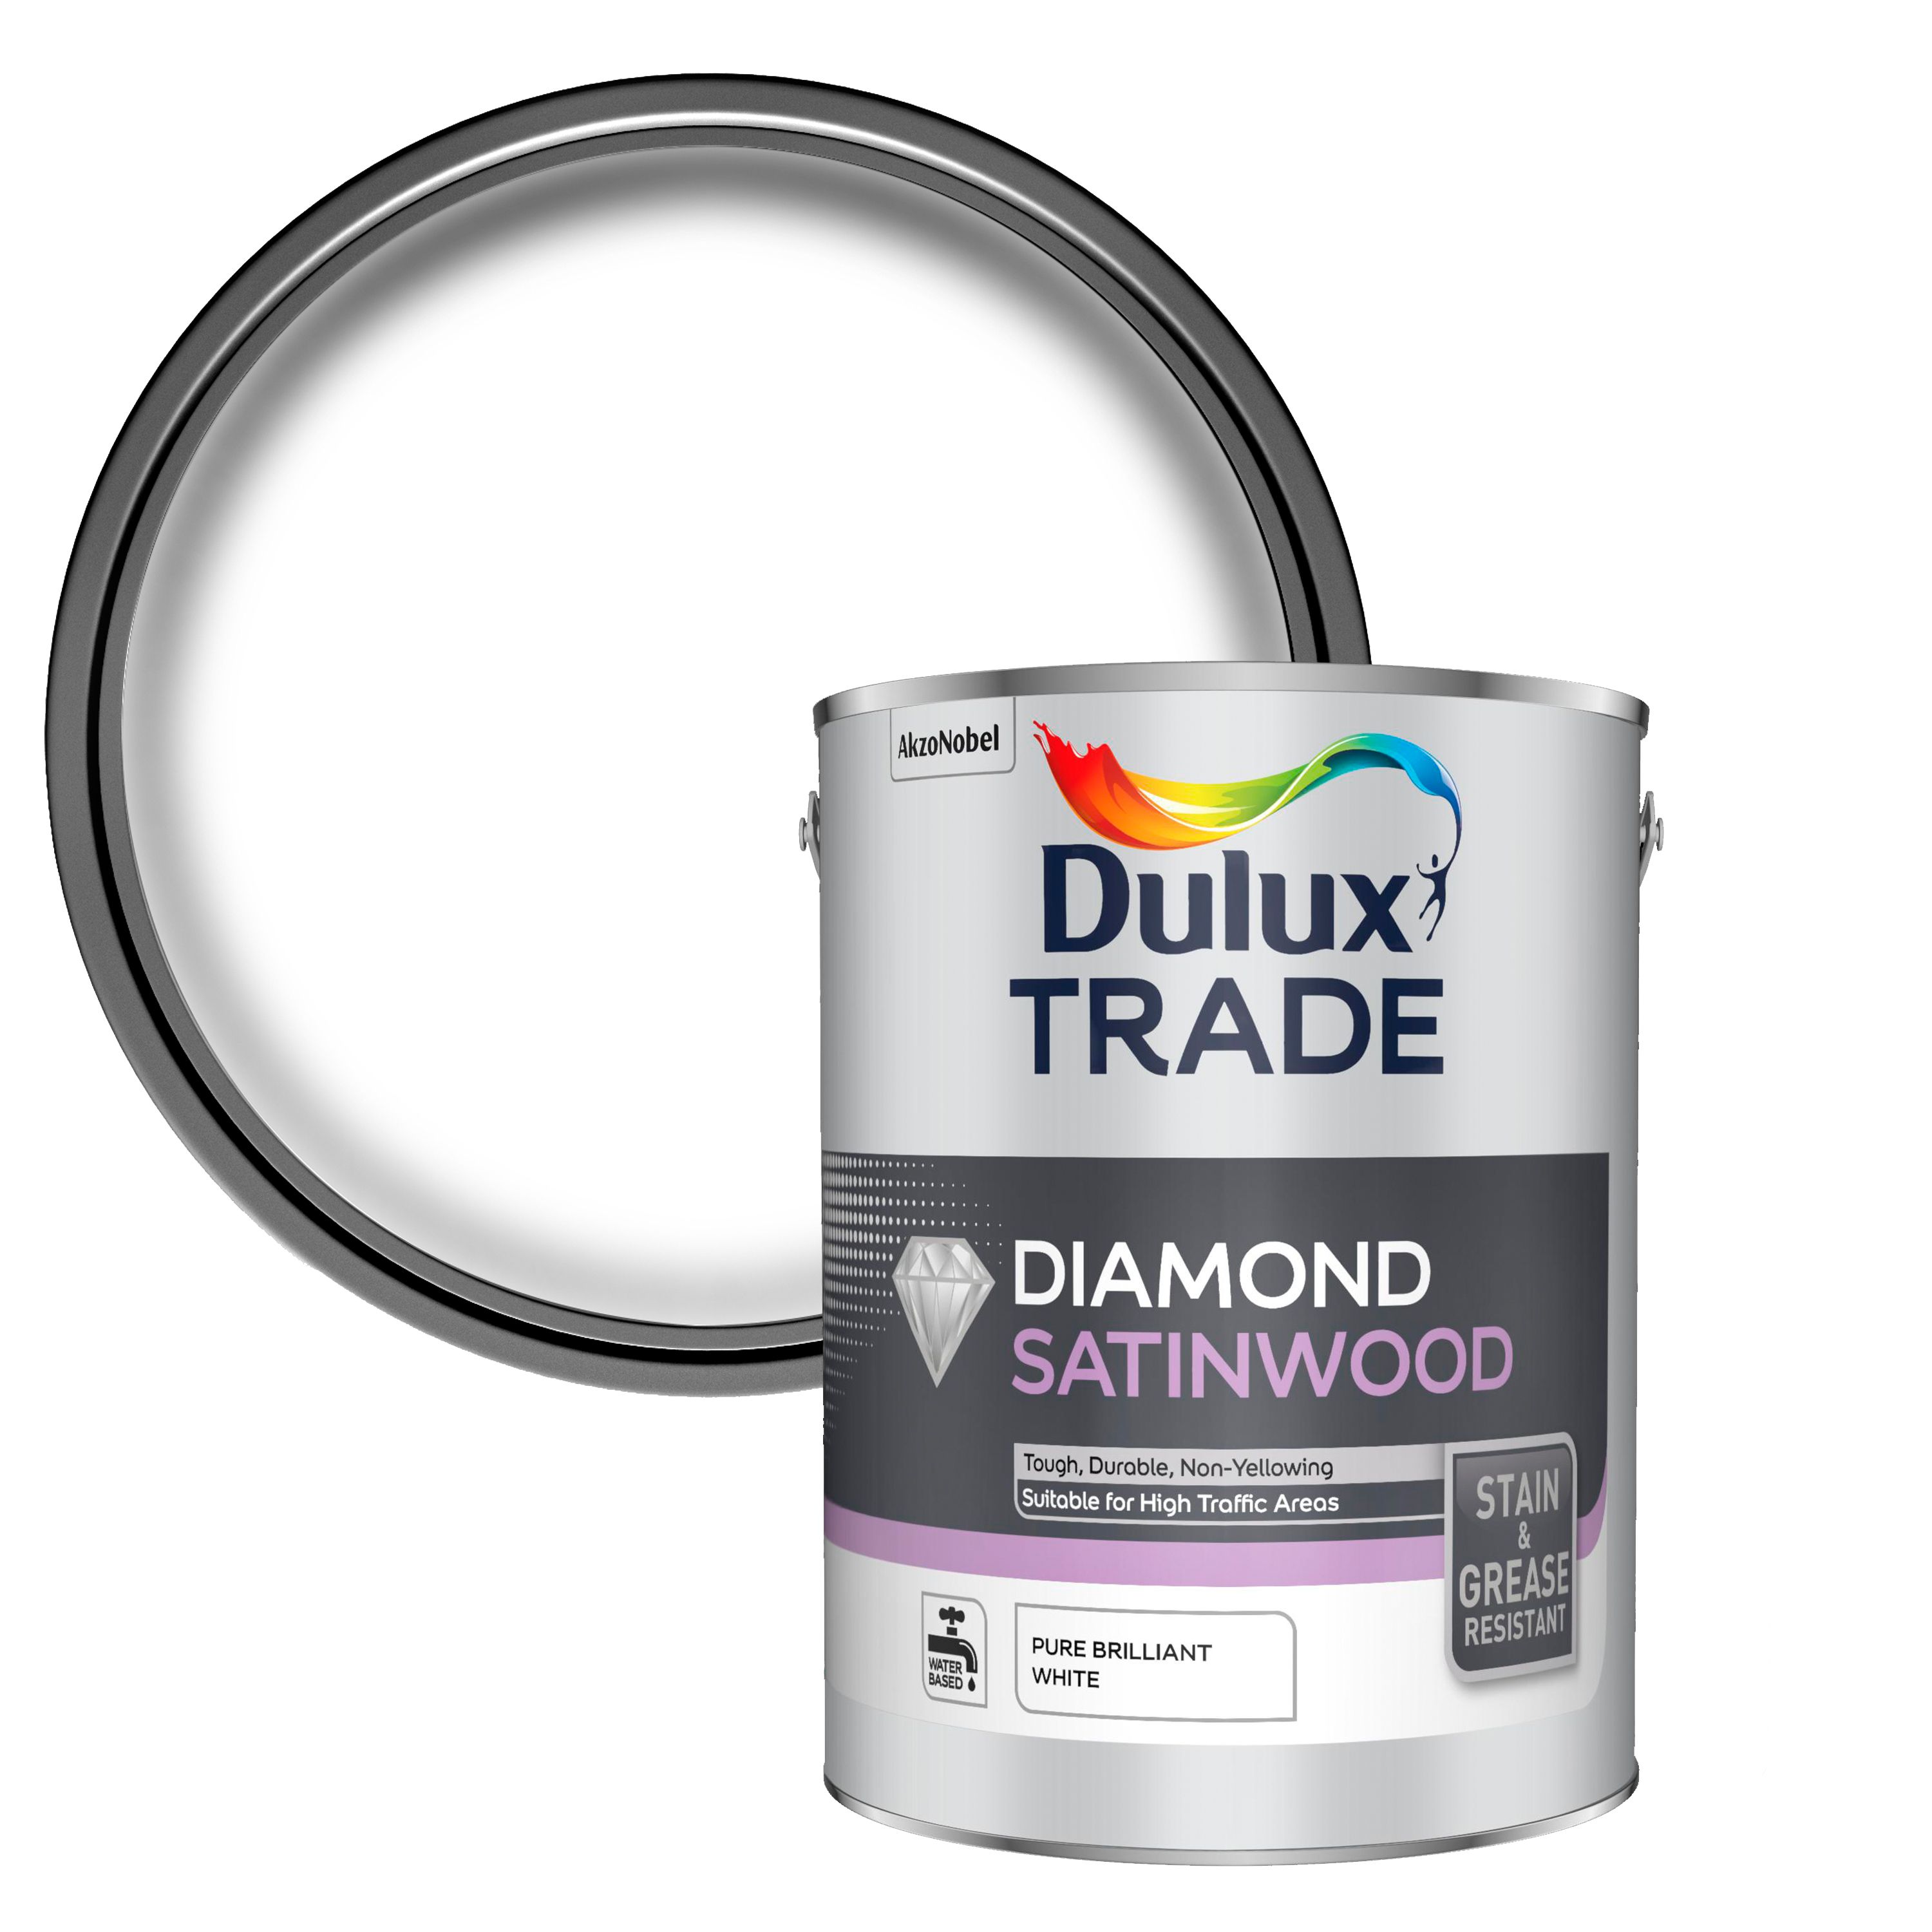  Dulux  Trade Diamond  Pure brilliant white Satinwood paint  